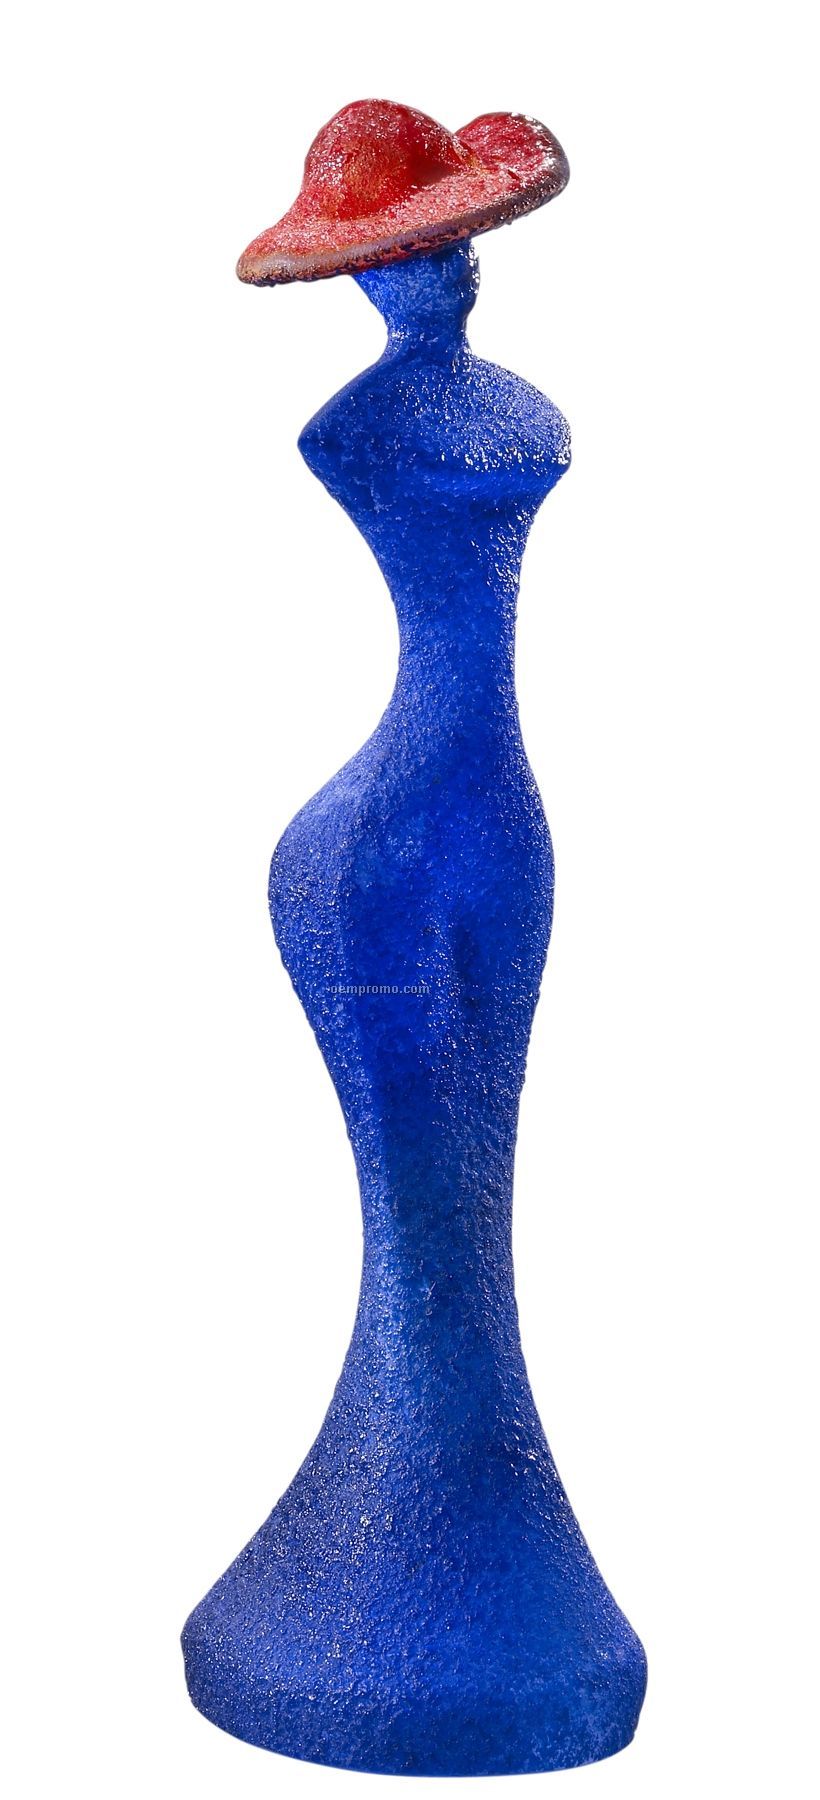 Catwalk Madame Tight Blue Glass Sculpture By Kjell Engman